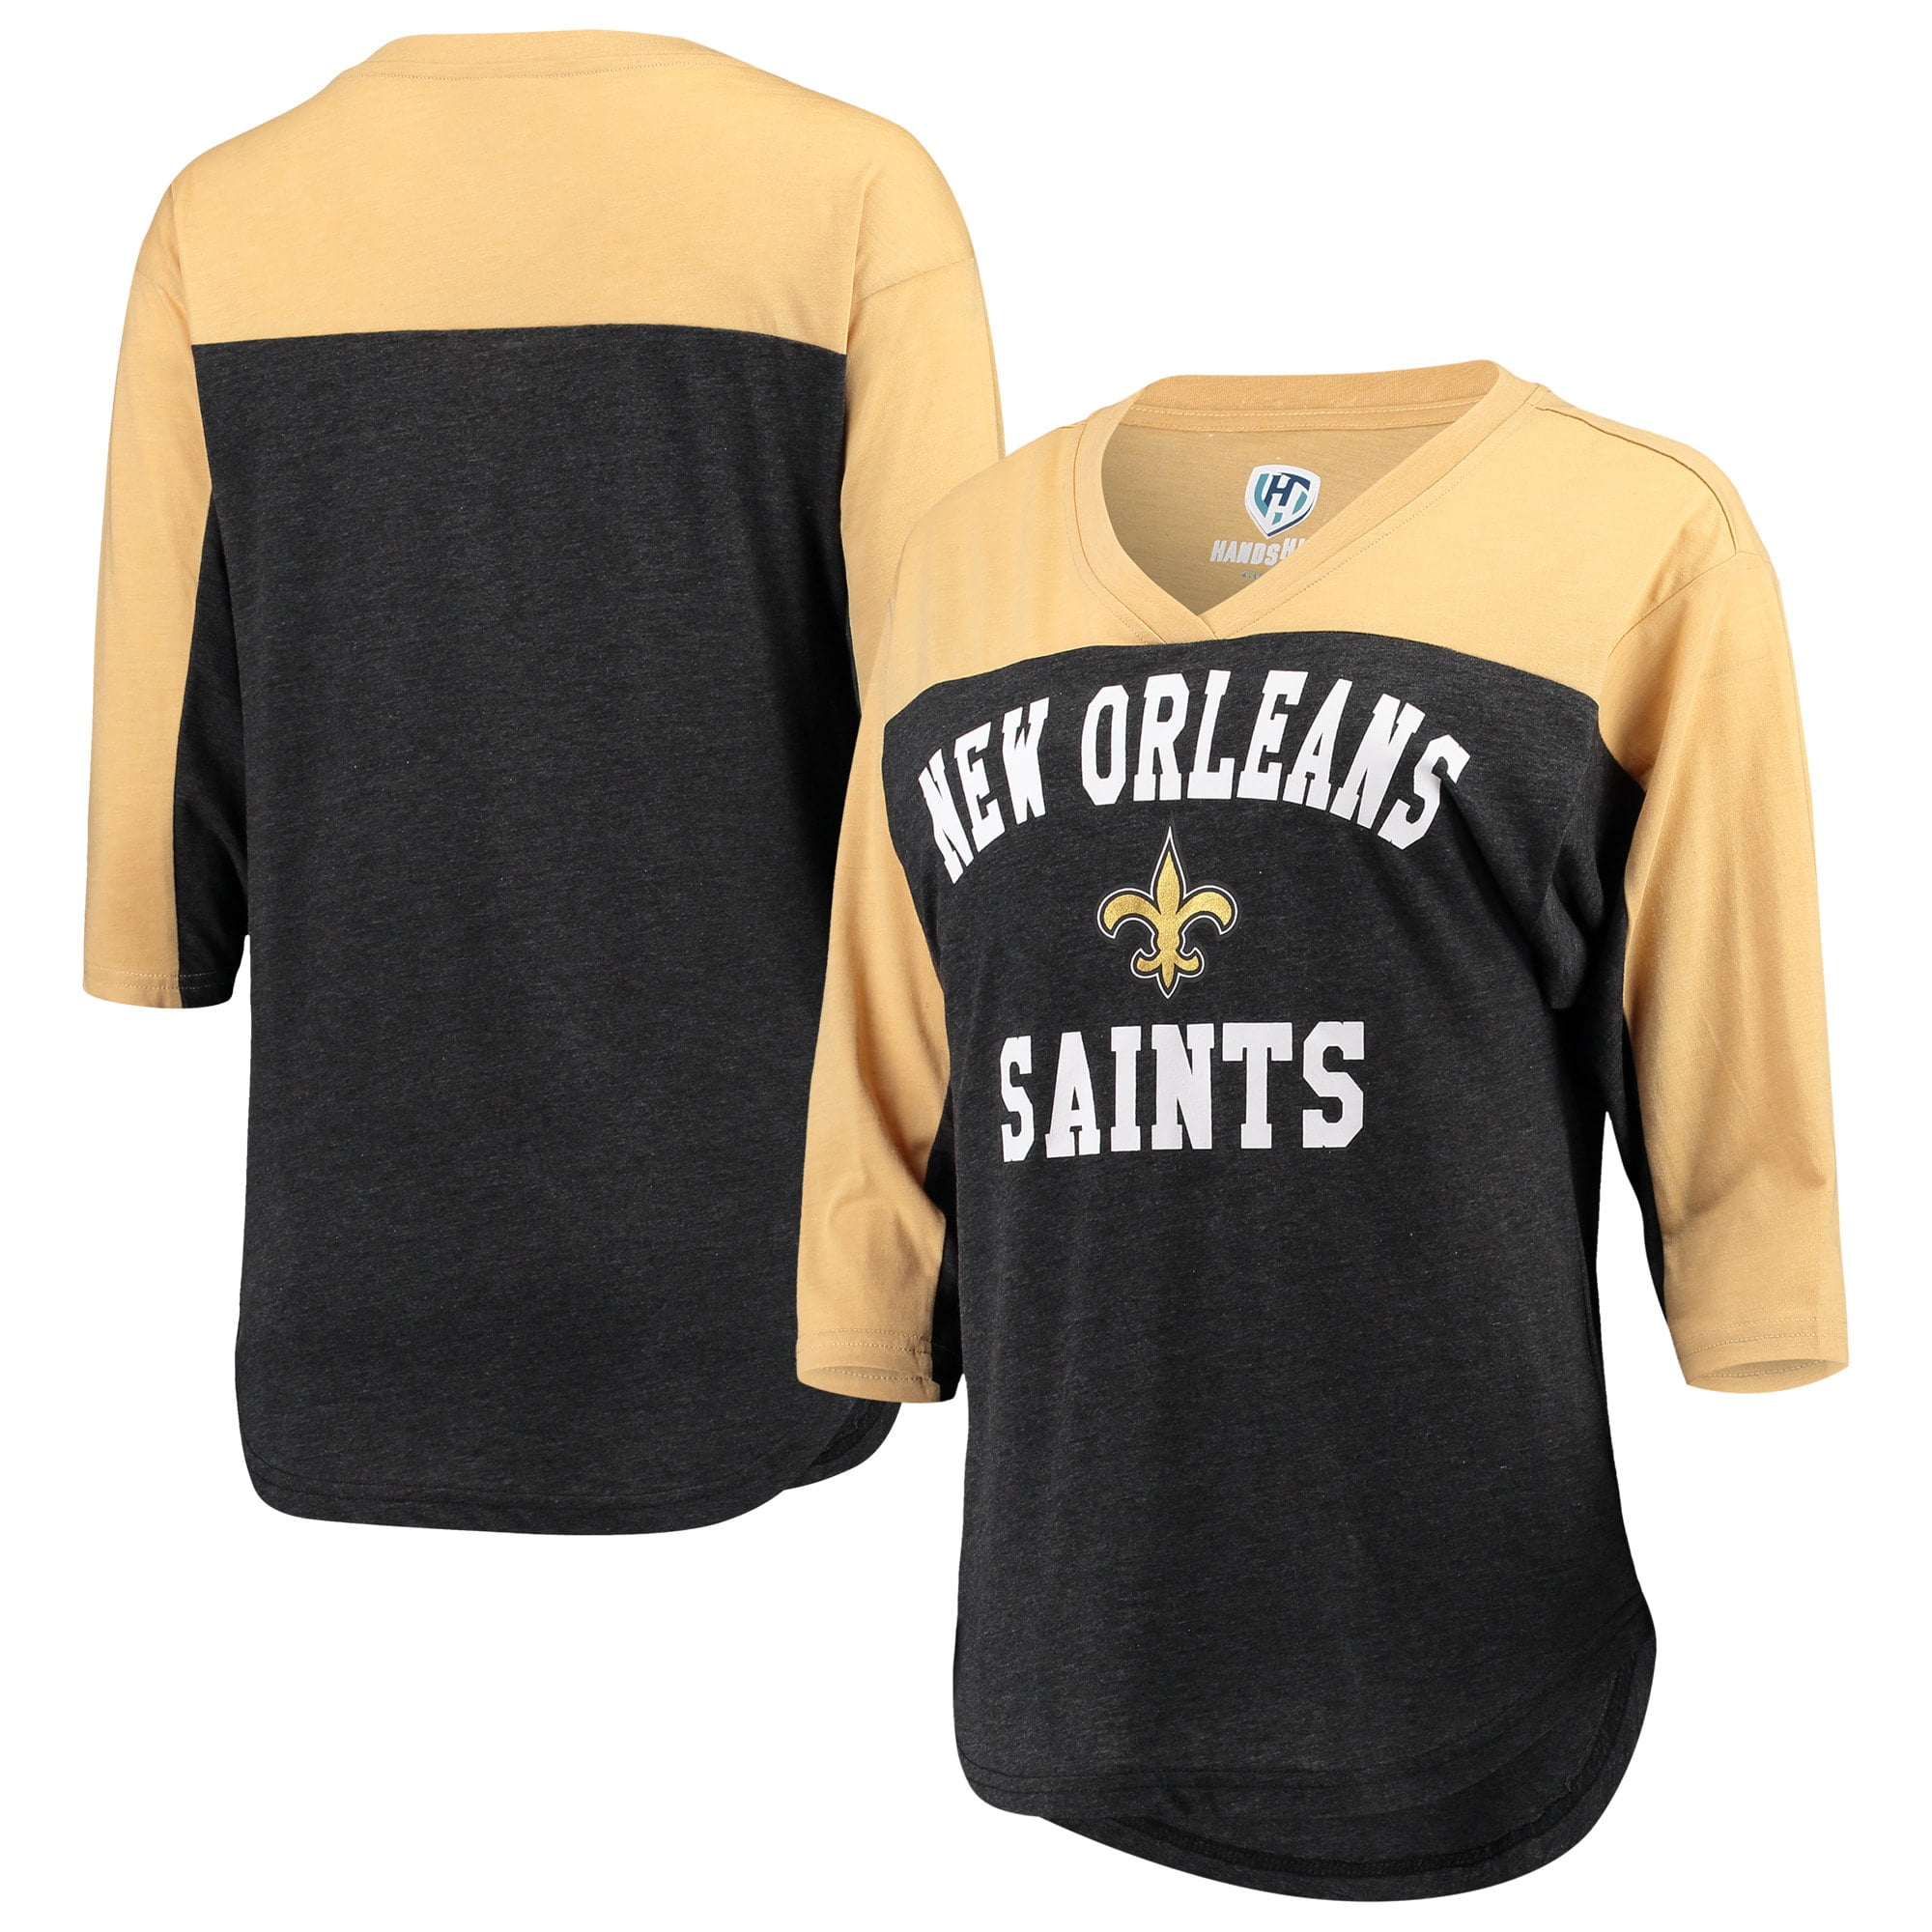 new orleans saints women's long sleeve shirt